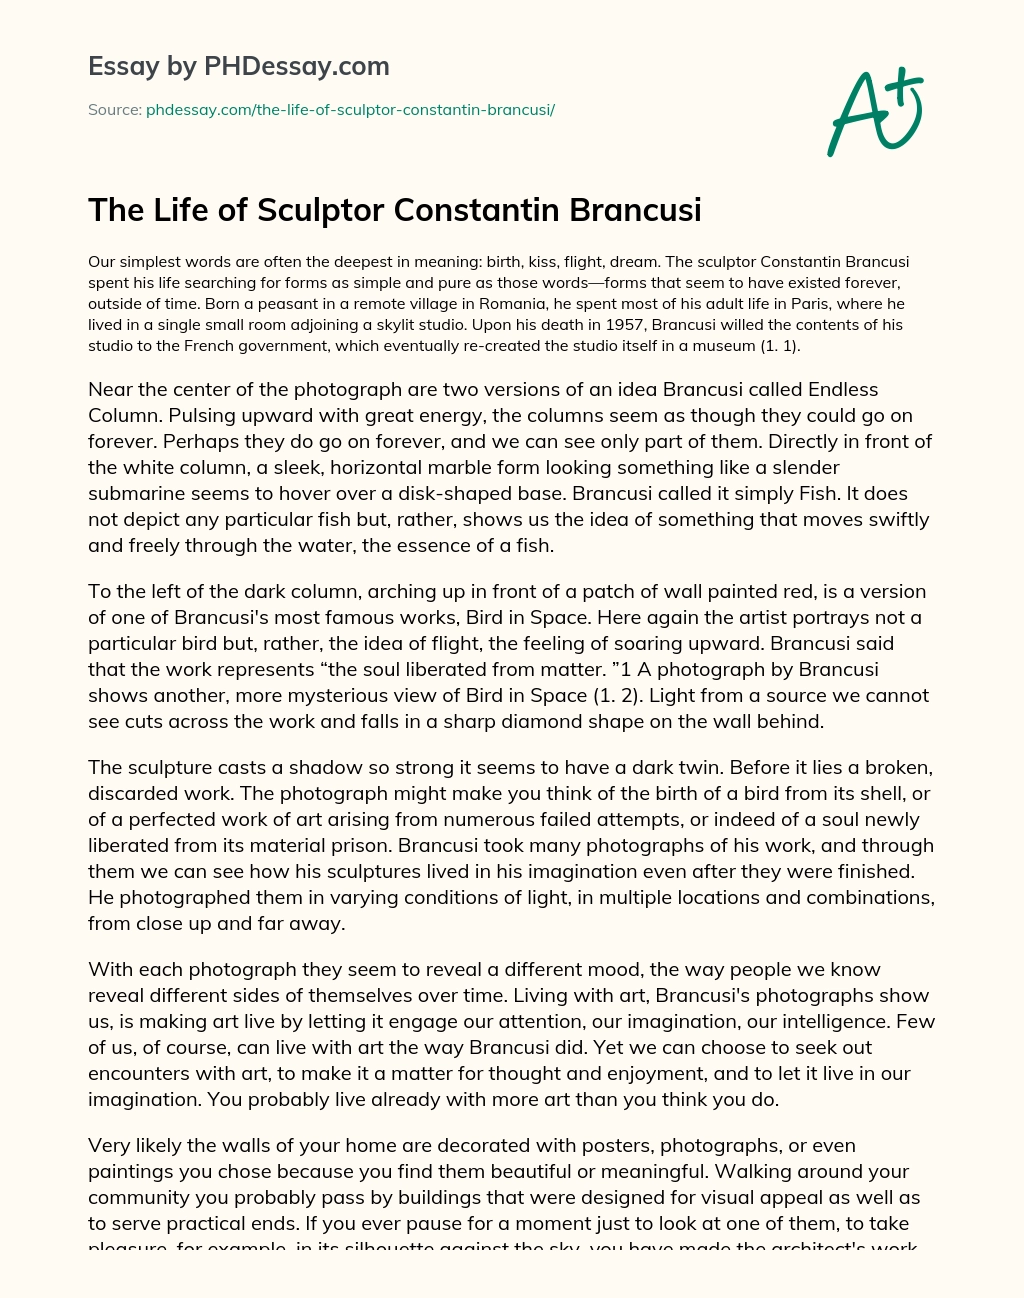 The Life of Sculptor Constantin Brancusi essay